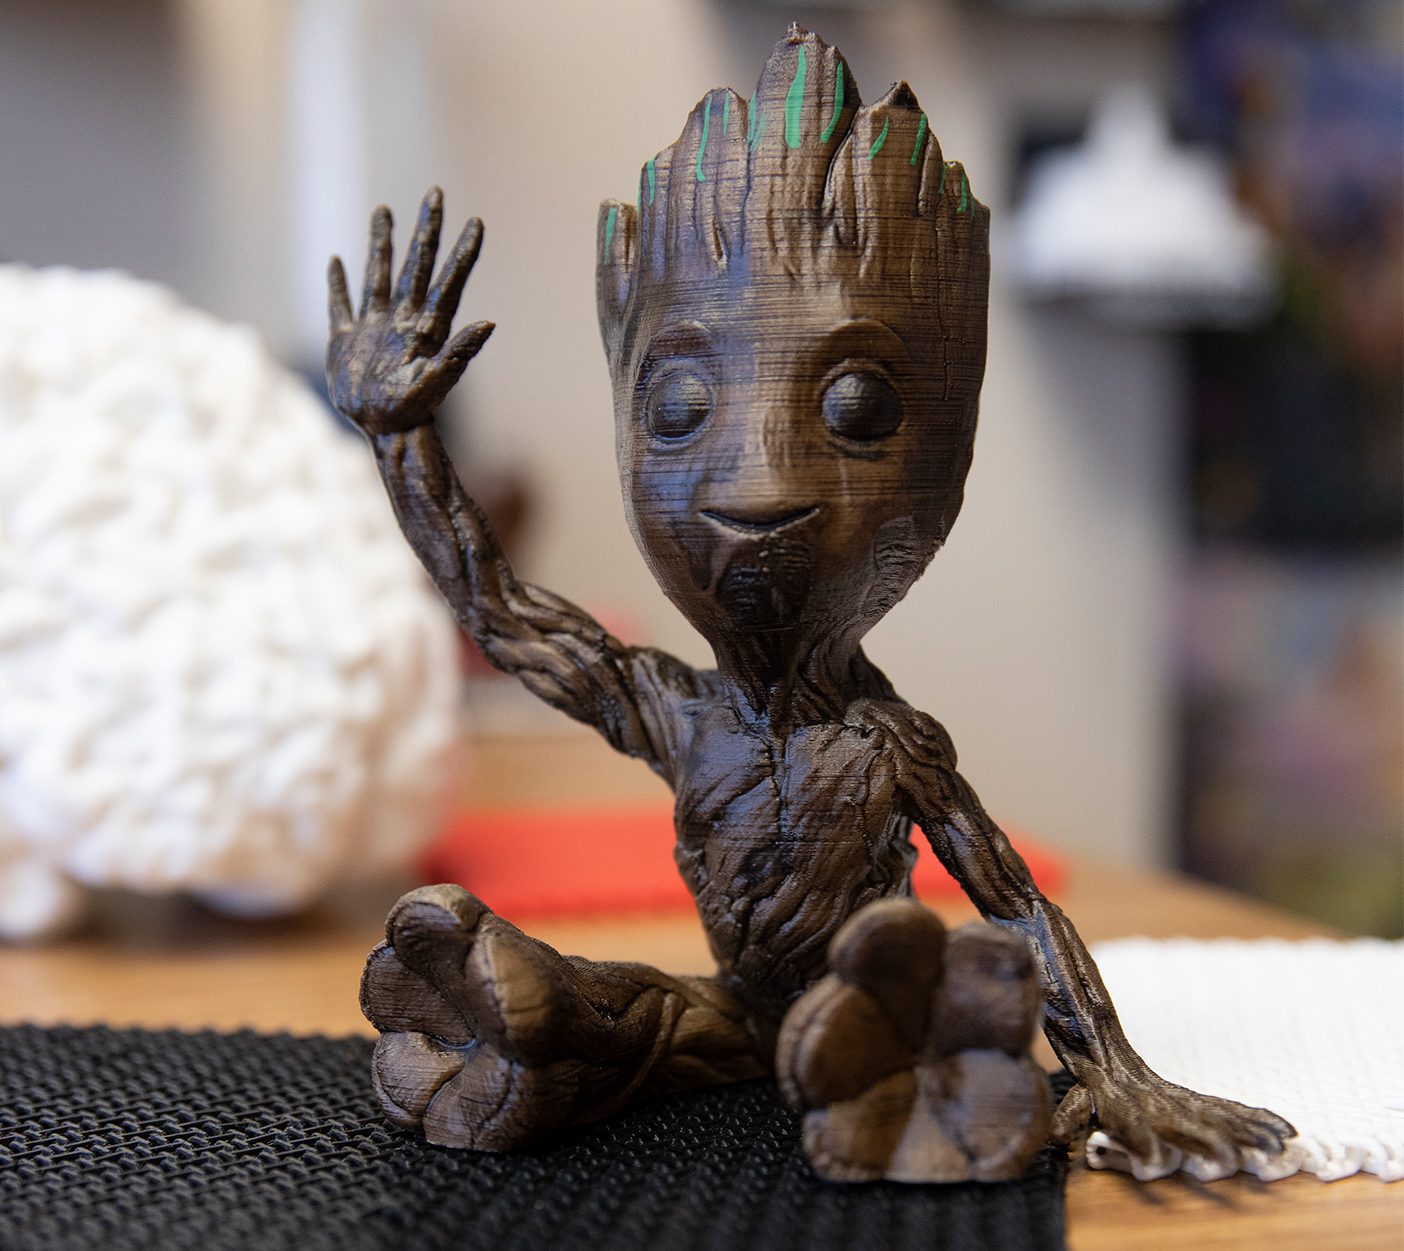 A Groot figurine.